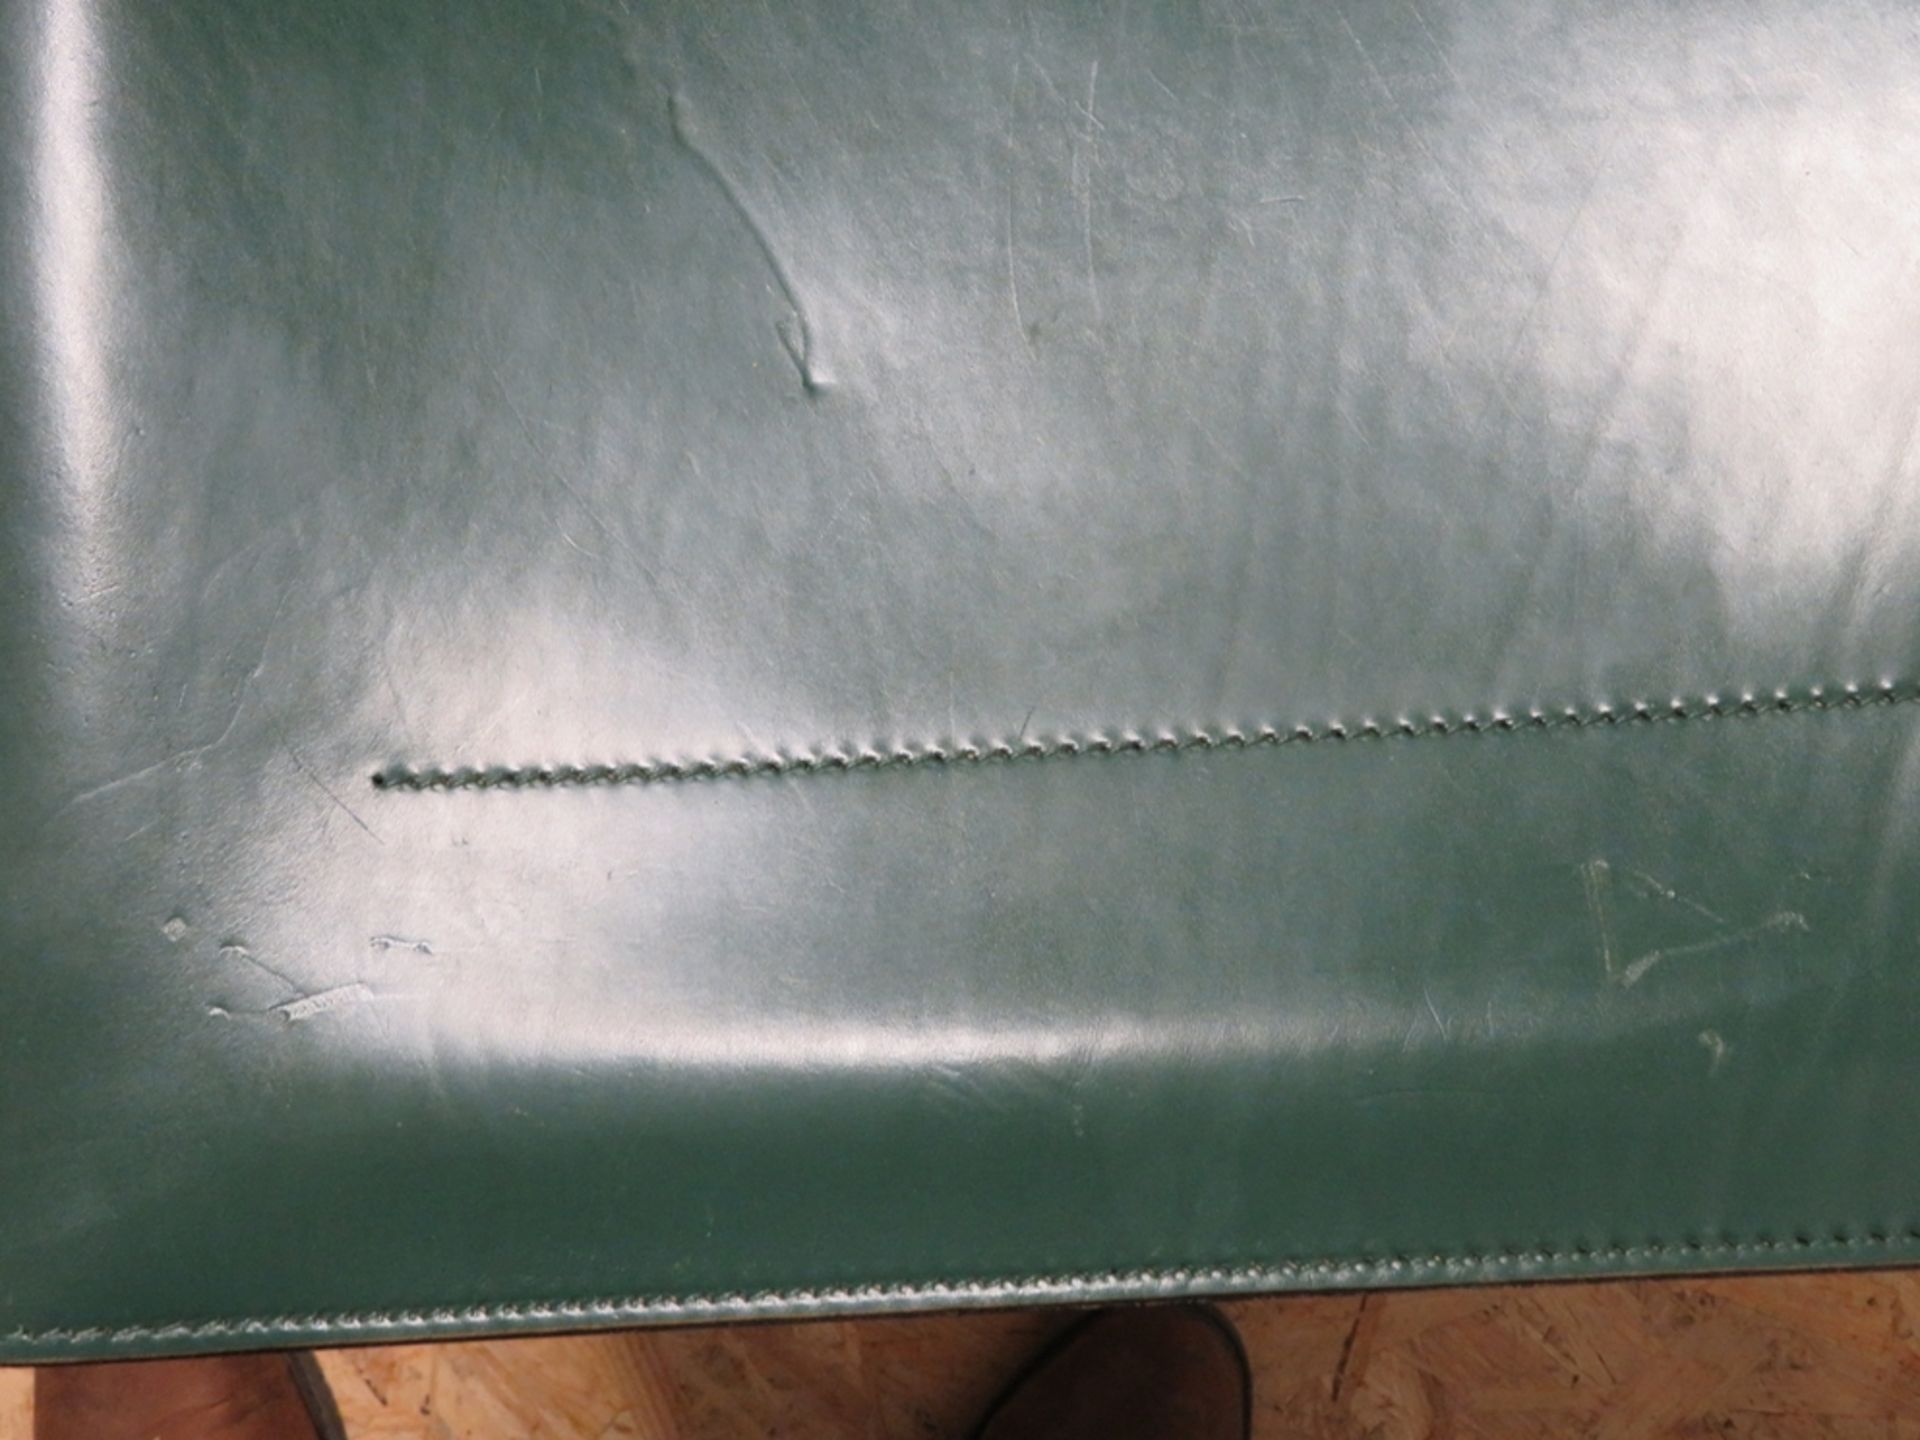 2 Designer Armlehnstühle, geschwärztes Metall mit grünem Lederbezug, gem. "Matteo Grassi", Gebrauch - Image 3 of 3